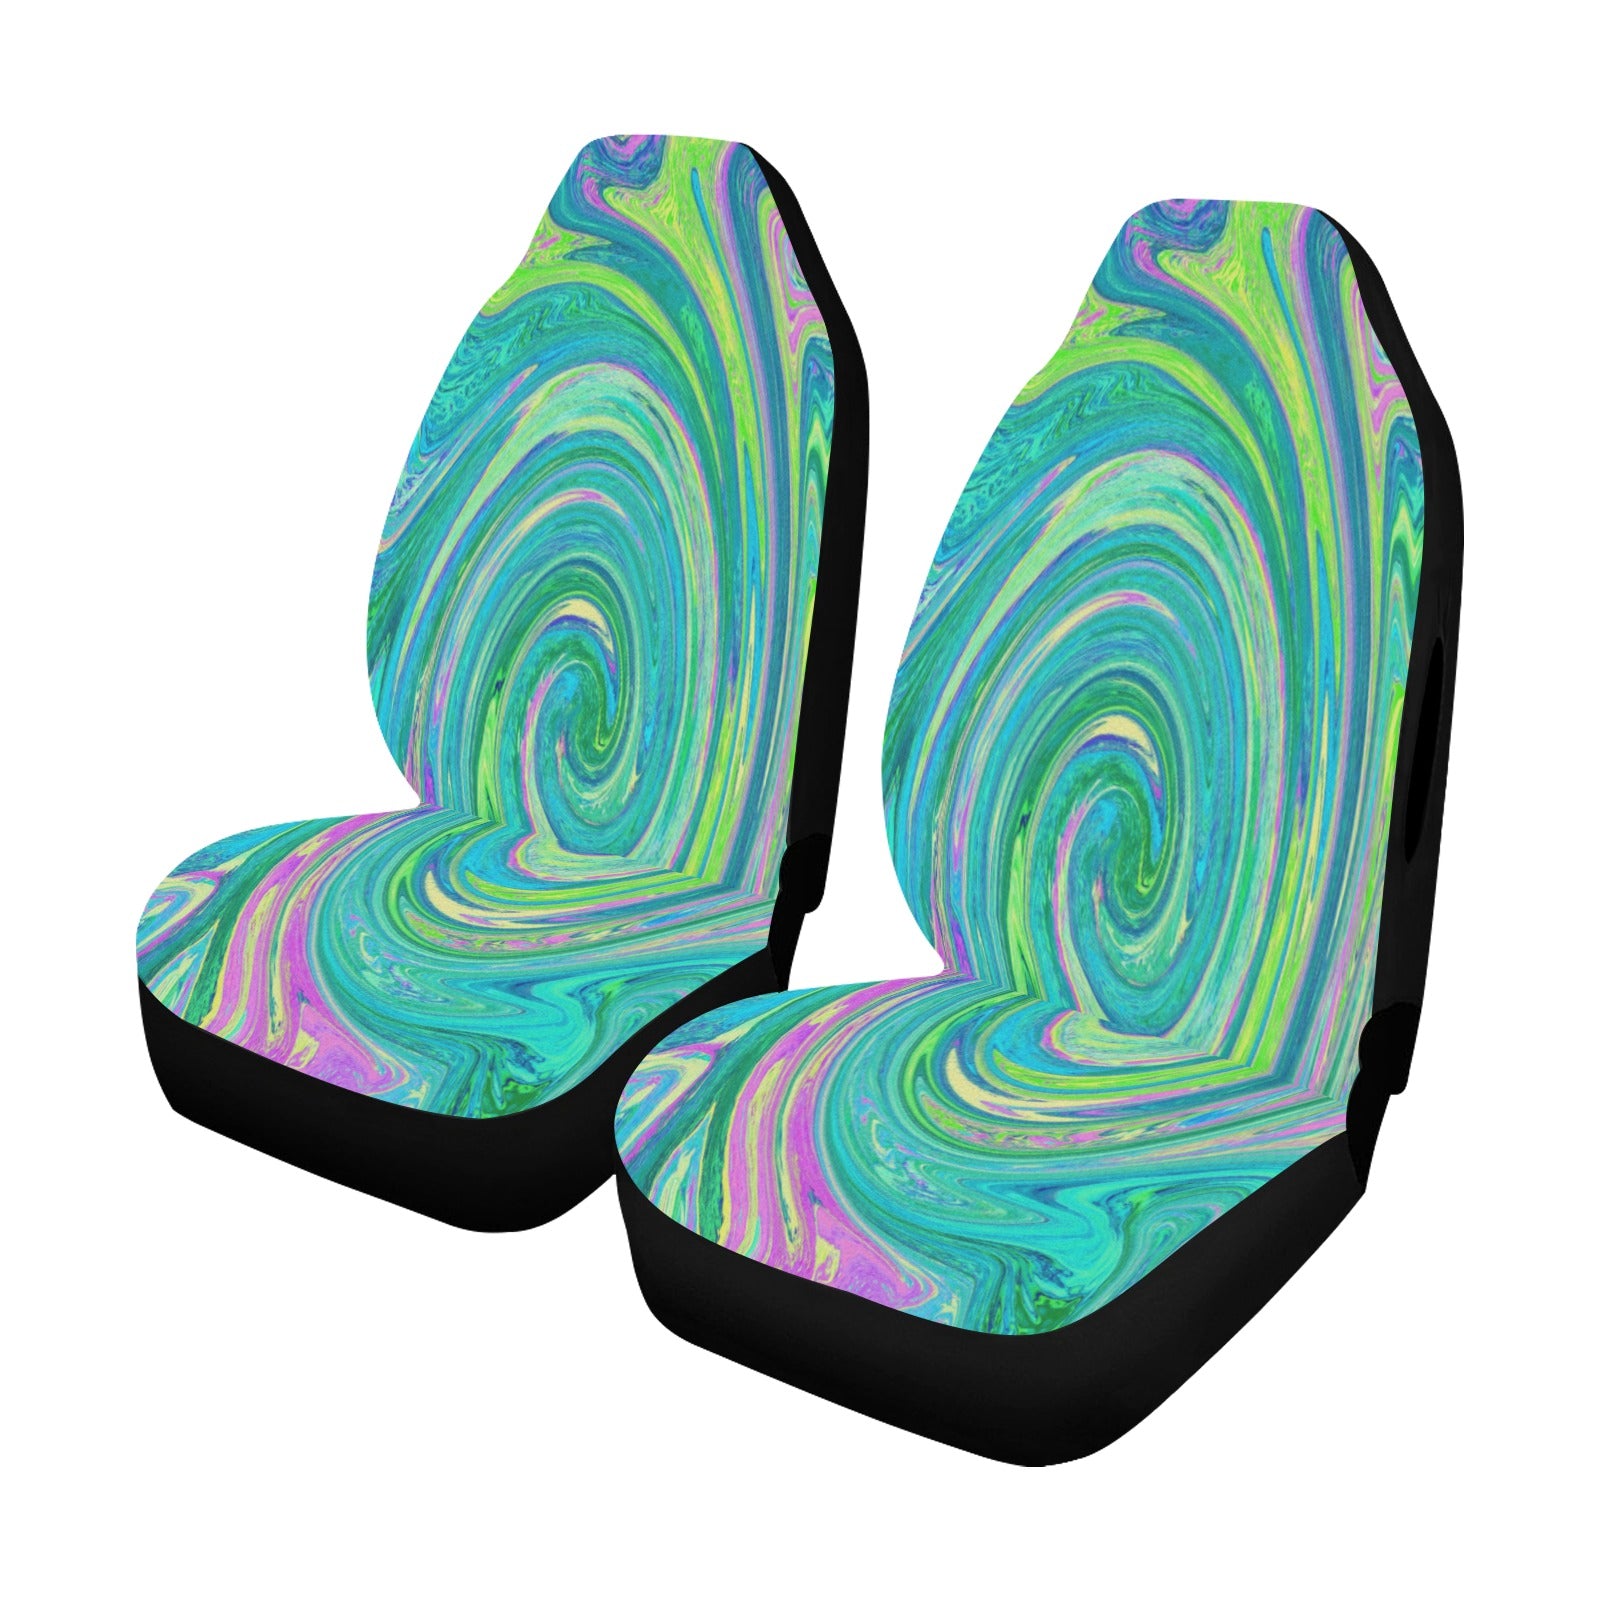 Car Seat Covers - Groovy Abstract Retro Aquamarine Swirl